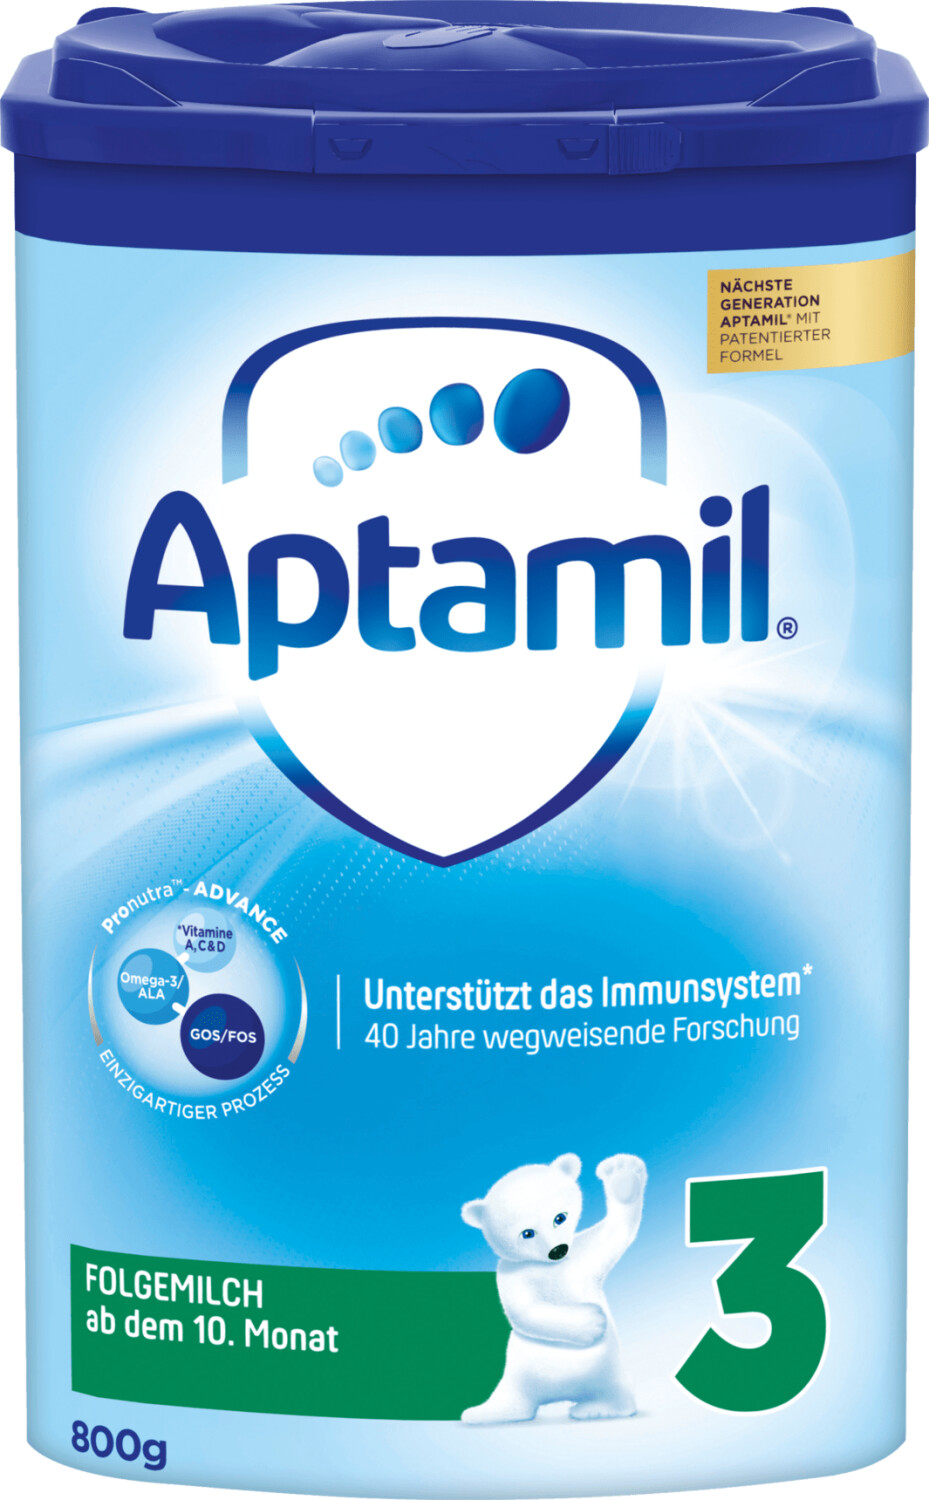 Aptamil Pronutra 3 (800 g) ab 16,49 €